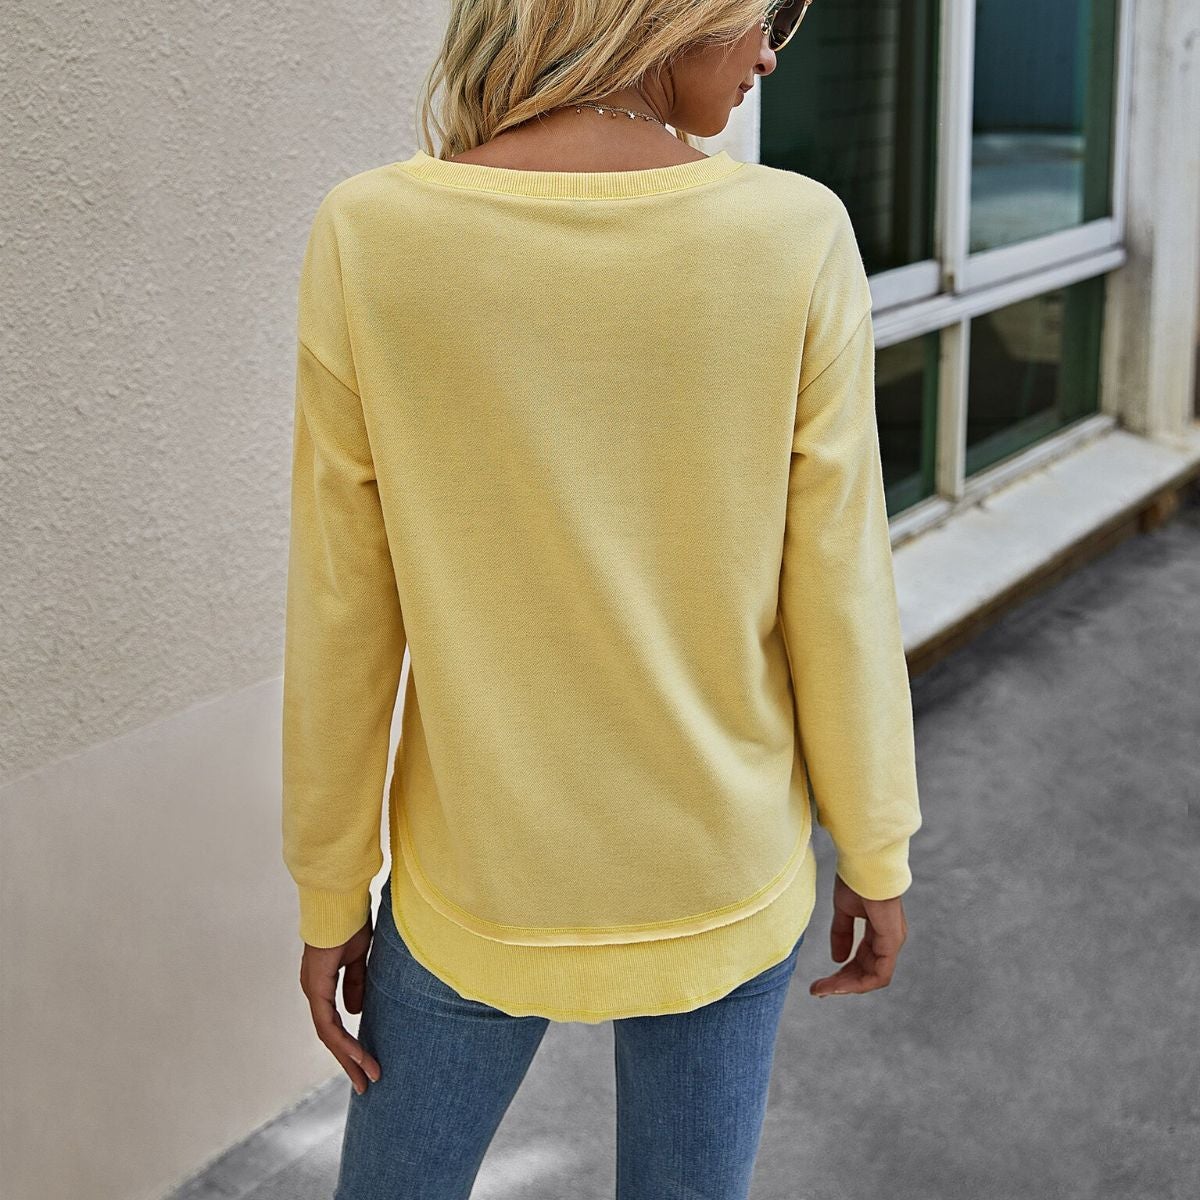 Benedikta - Casual Sweatshirt mit eleganter Passform